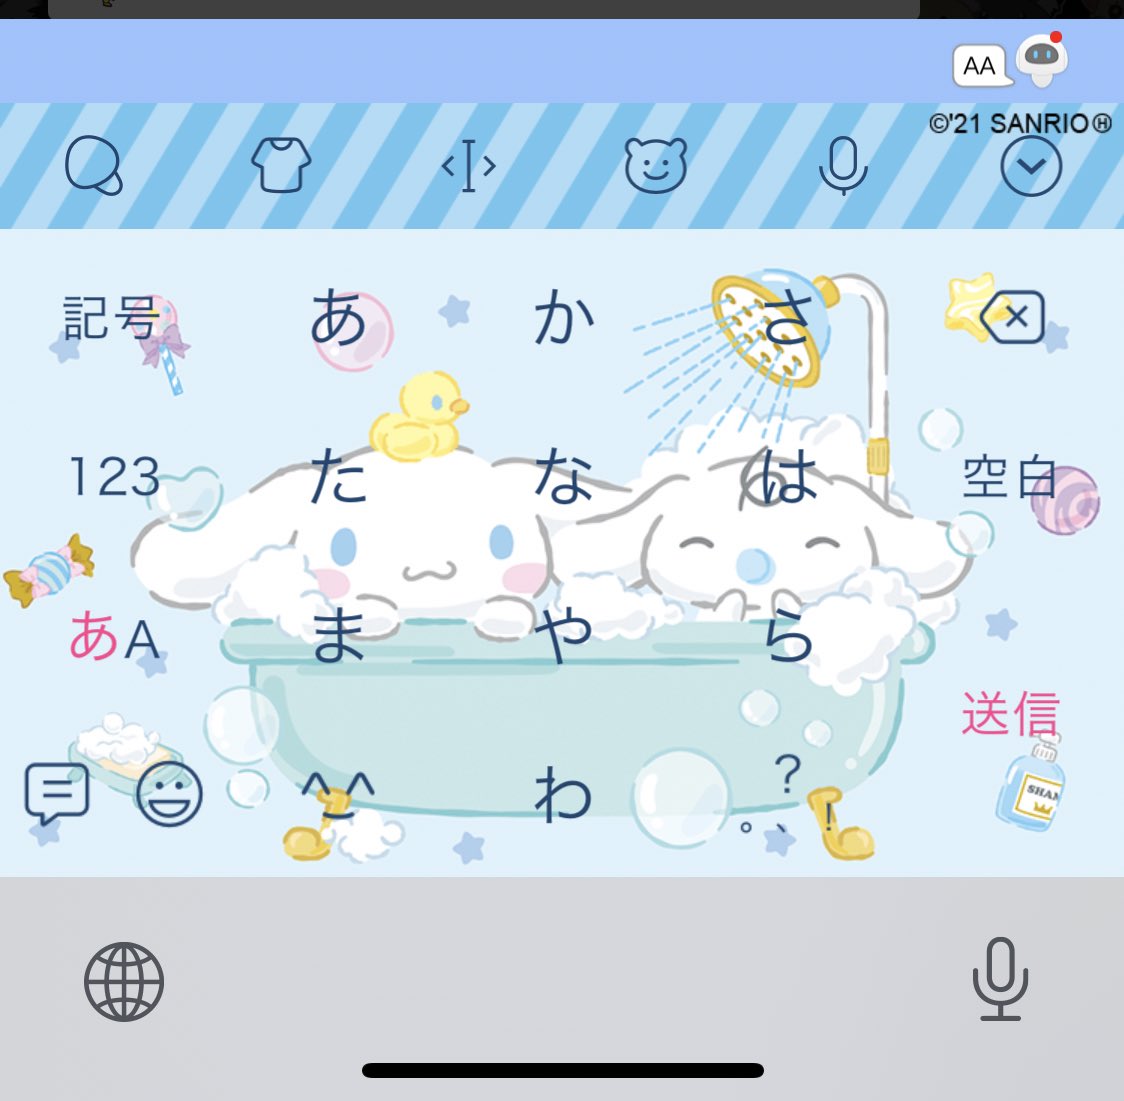 Simeji 日本語入力キーボード Pa Twitter シナモンかわいいです